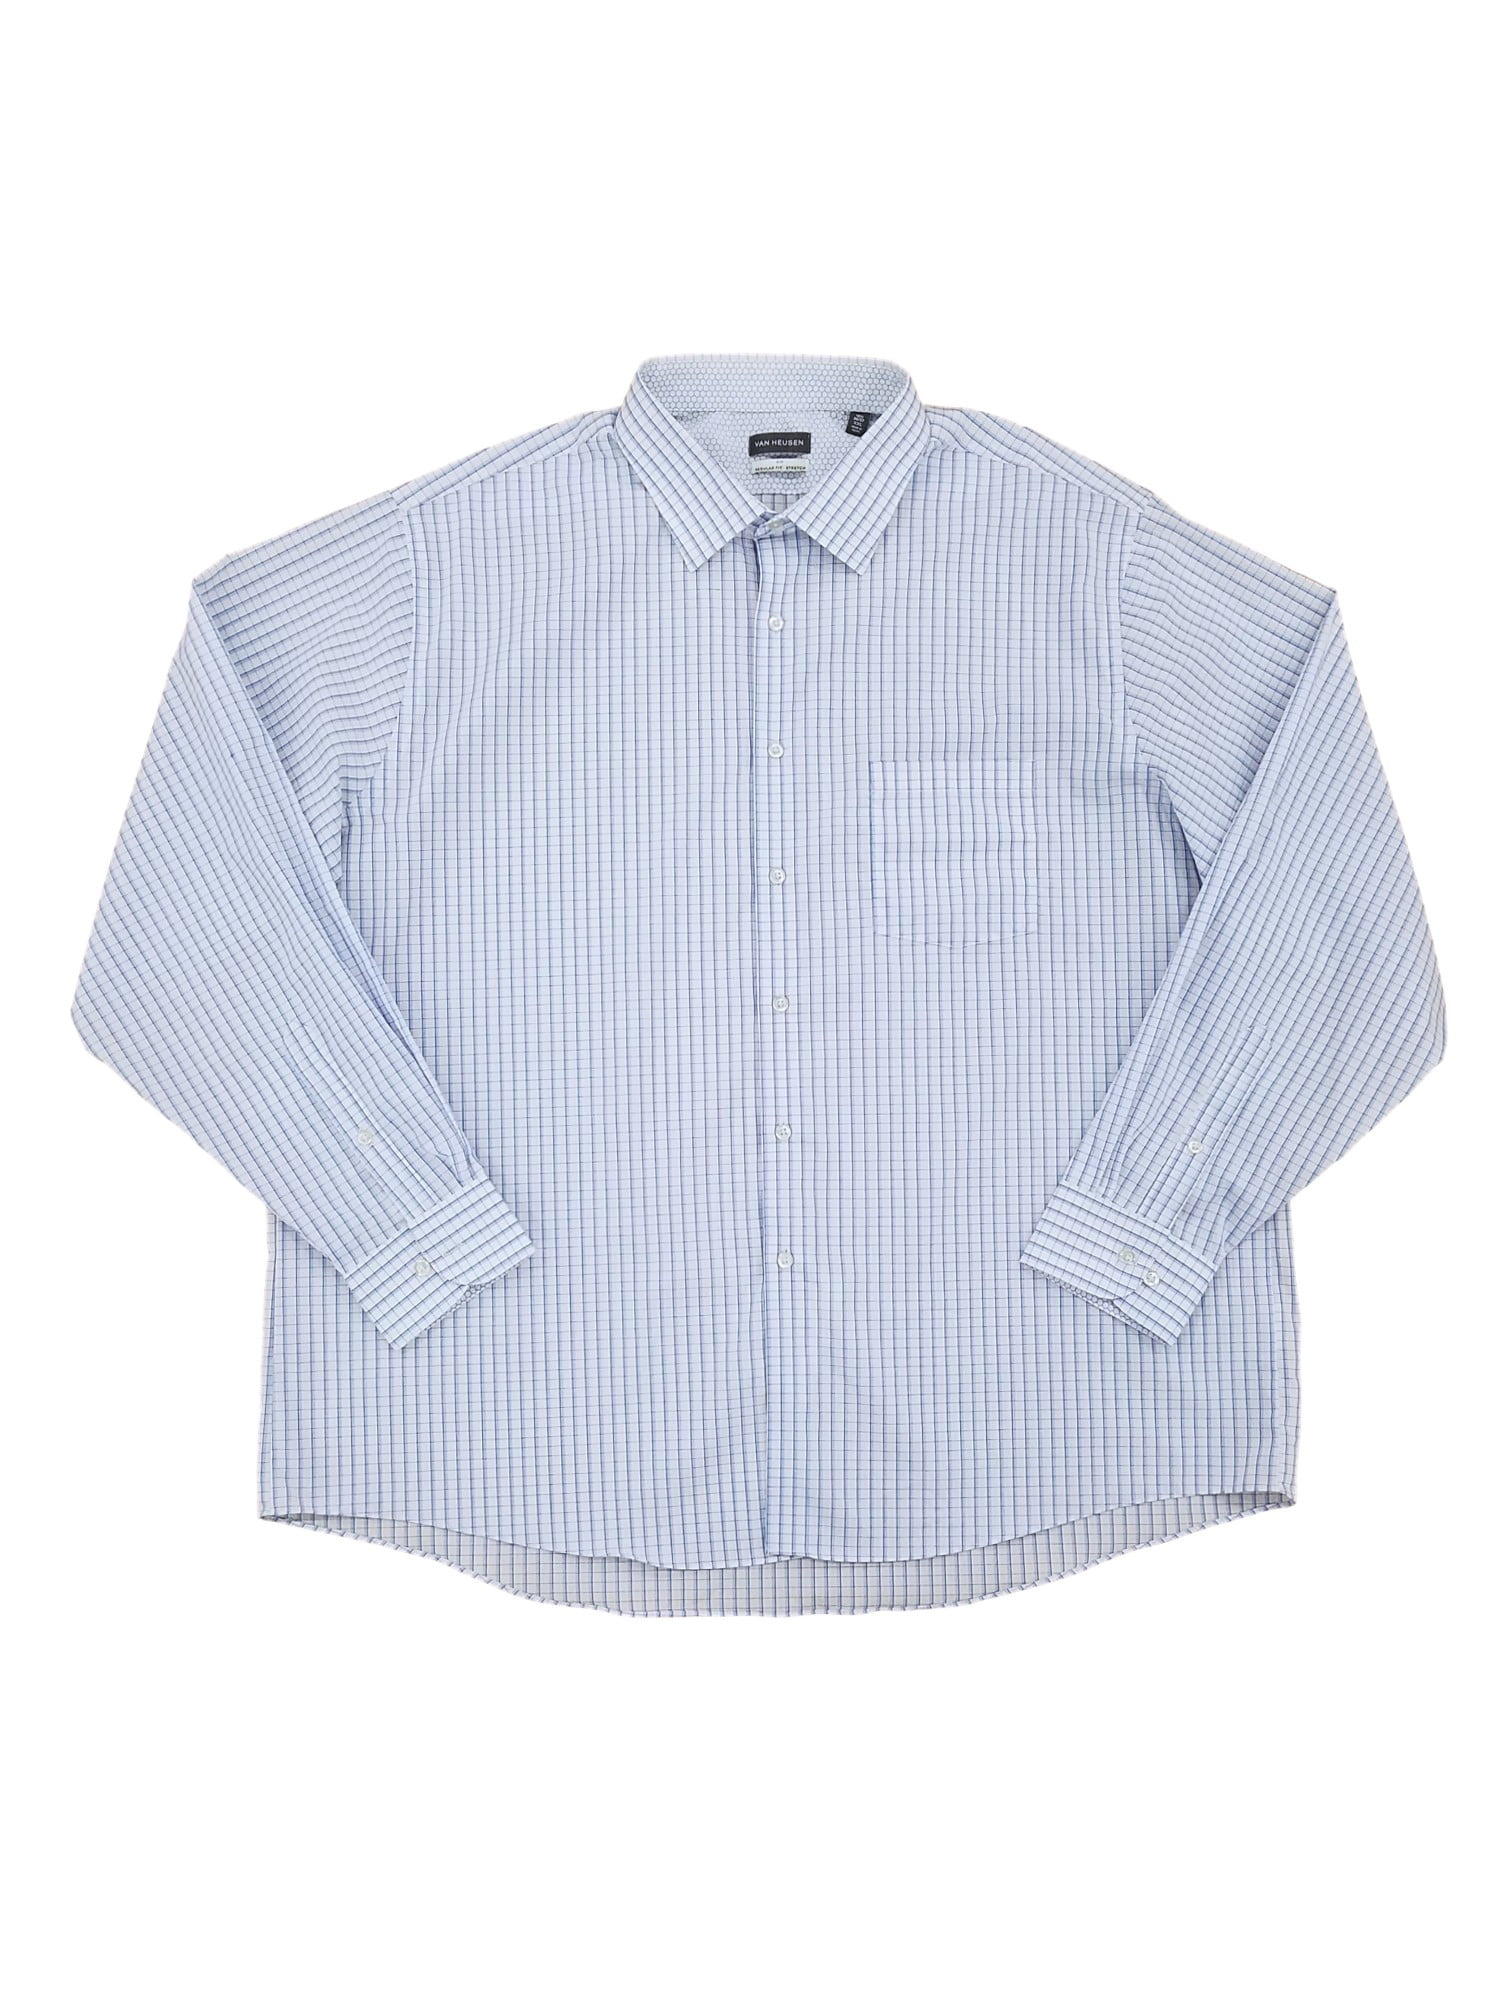 M Van Heusen Long-Sleeve Button-Front Shirt New Msrp $60.00 Sizes S L XL XXL 